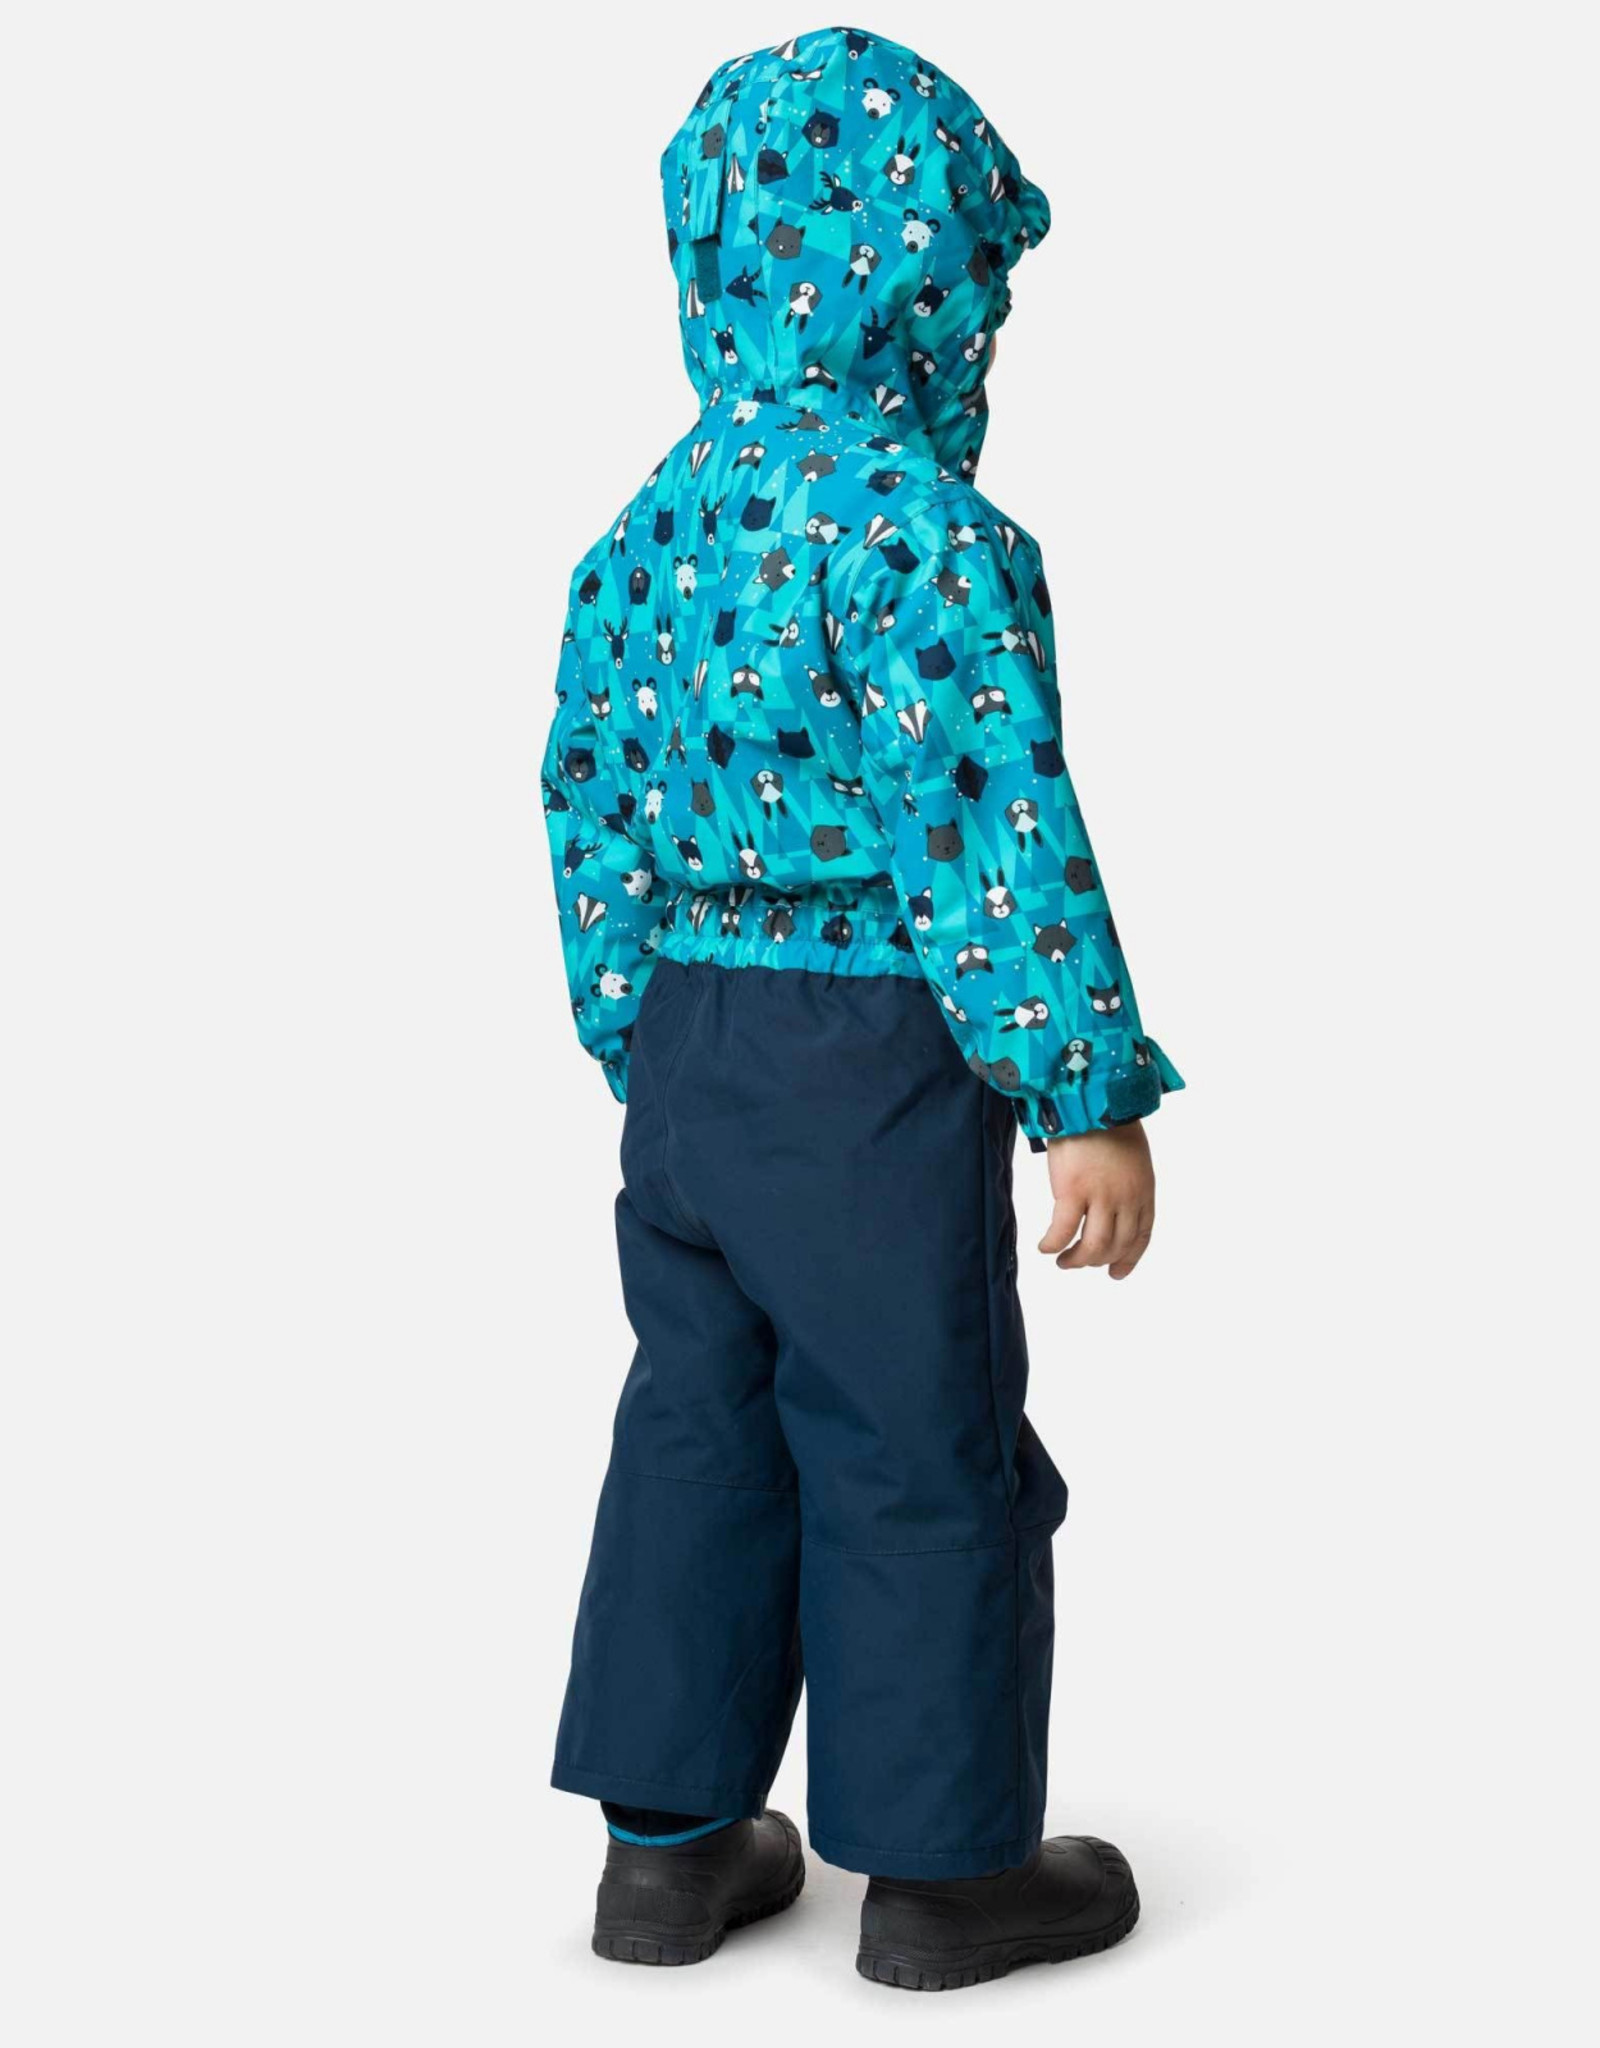 ROSSIGNOL Rossignol Child Flocon one pc Suit Size 2